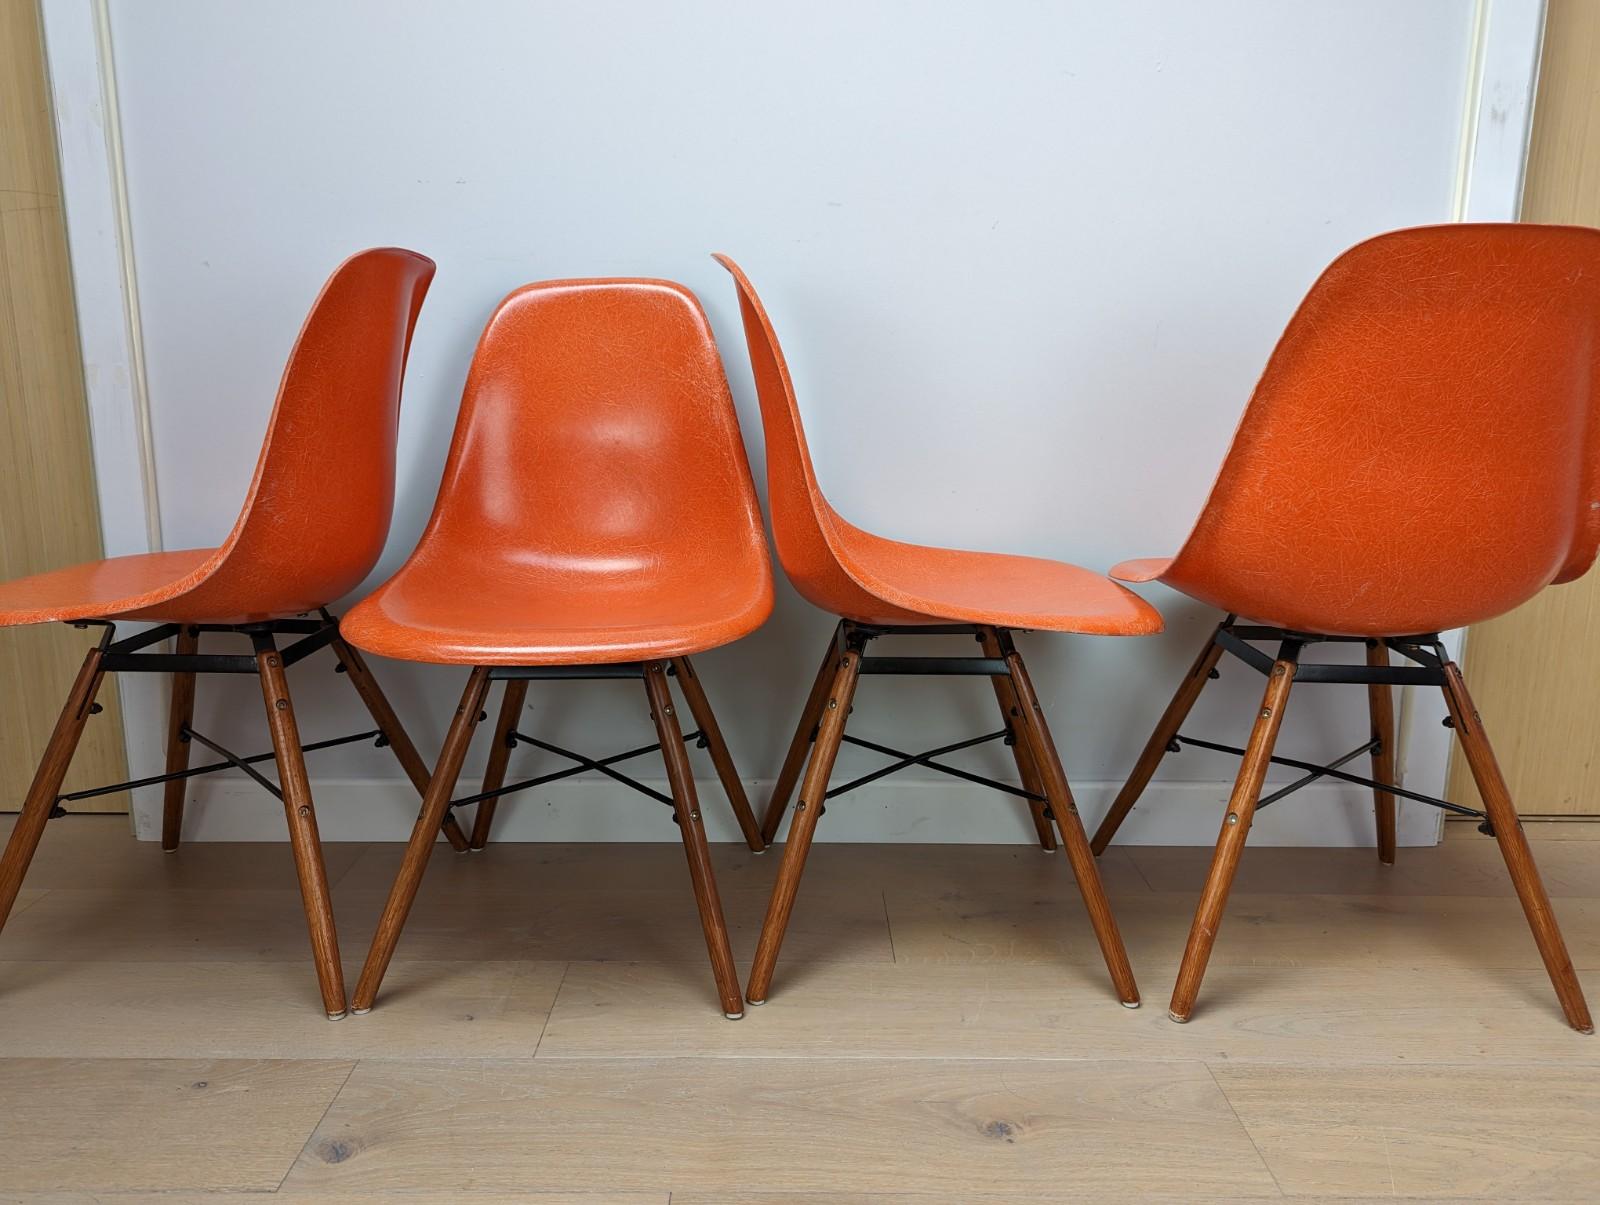 Pressed Set of 4 Herman Miller Fiberglass Eames DSW Chairs - Orange